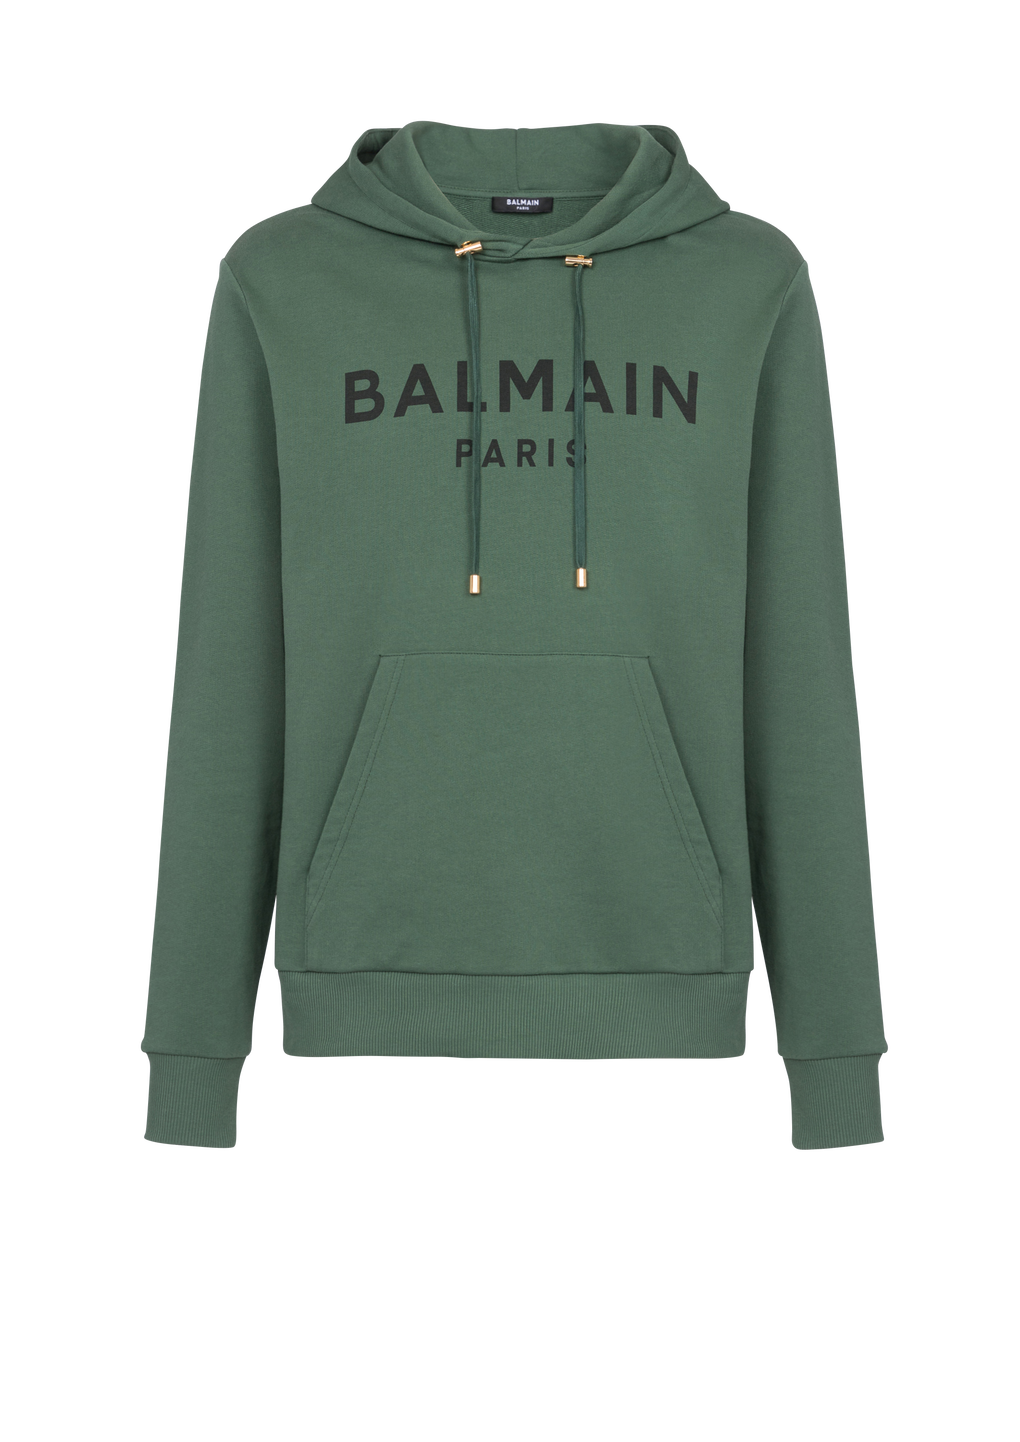 Hooded cotton sweatshirt with Balmain Paris logo print, green, hi-res